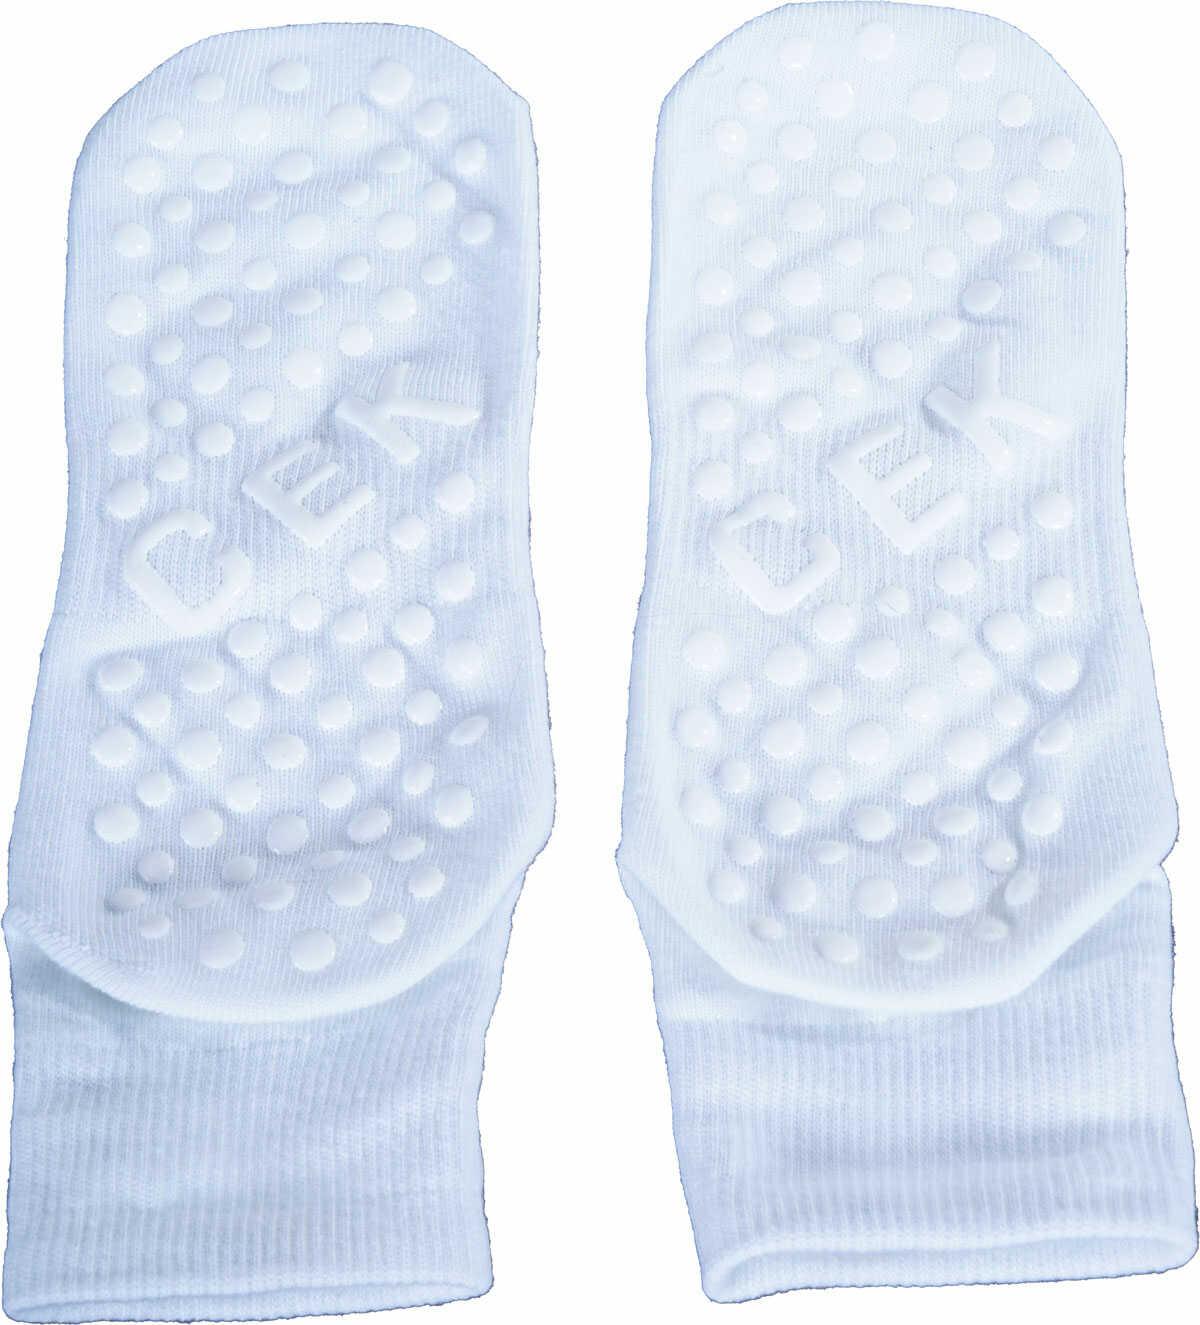 Non-slip socks 3 pairs white